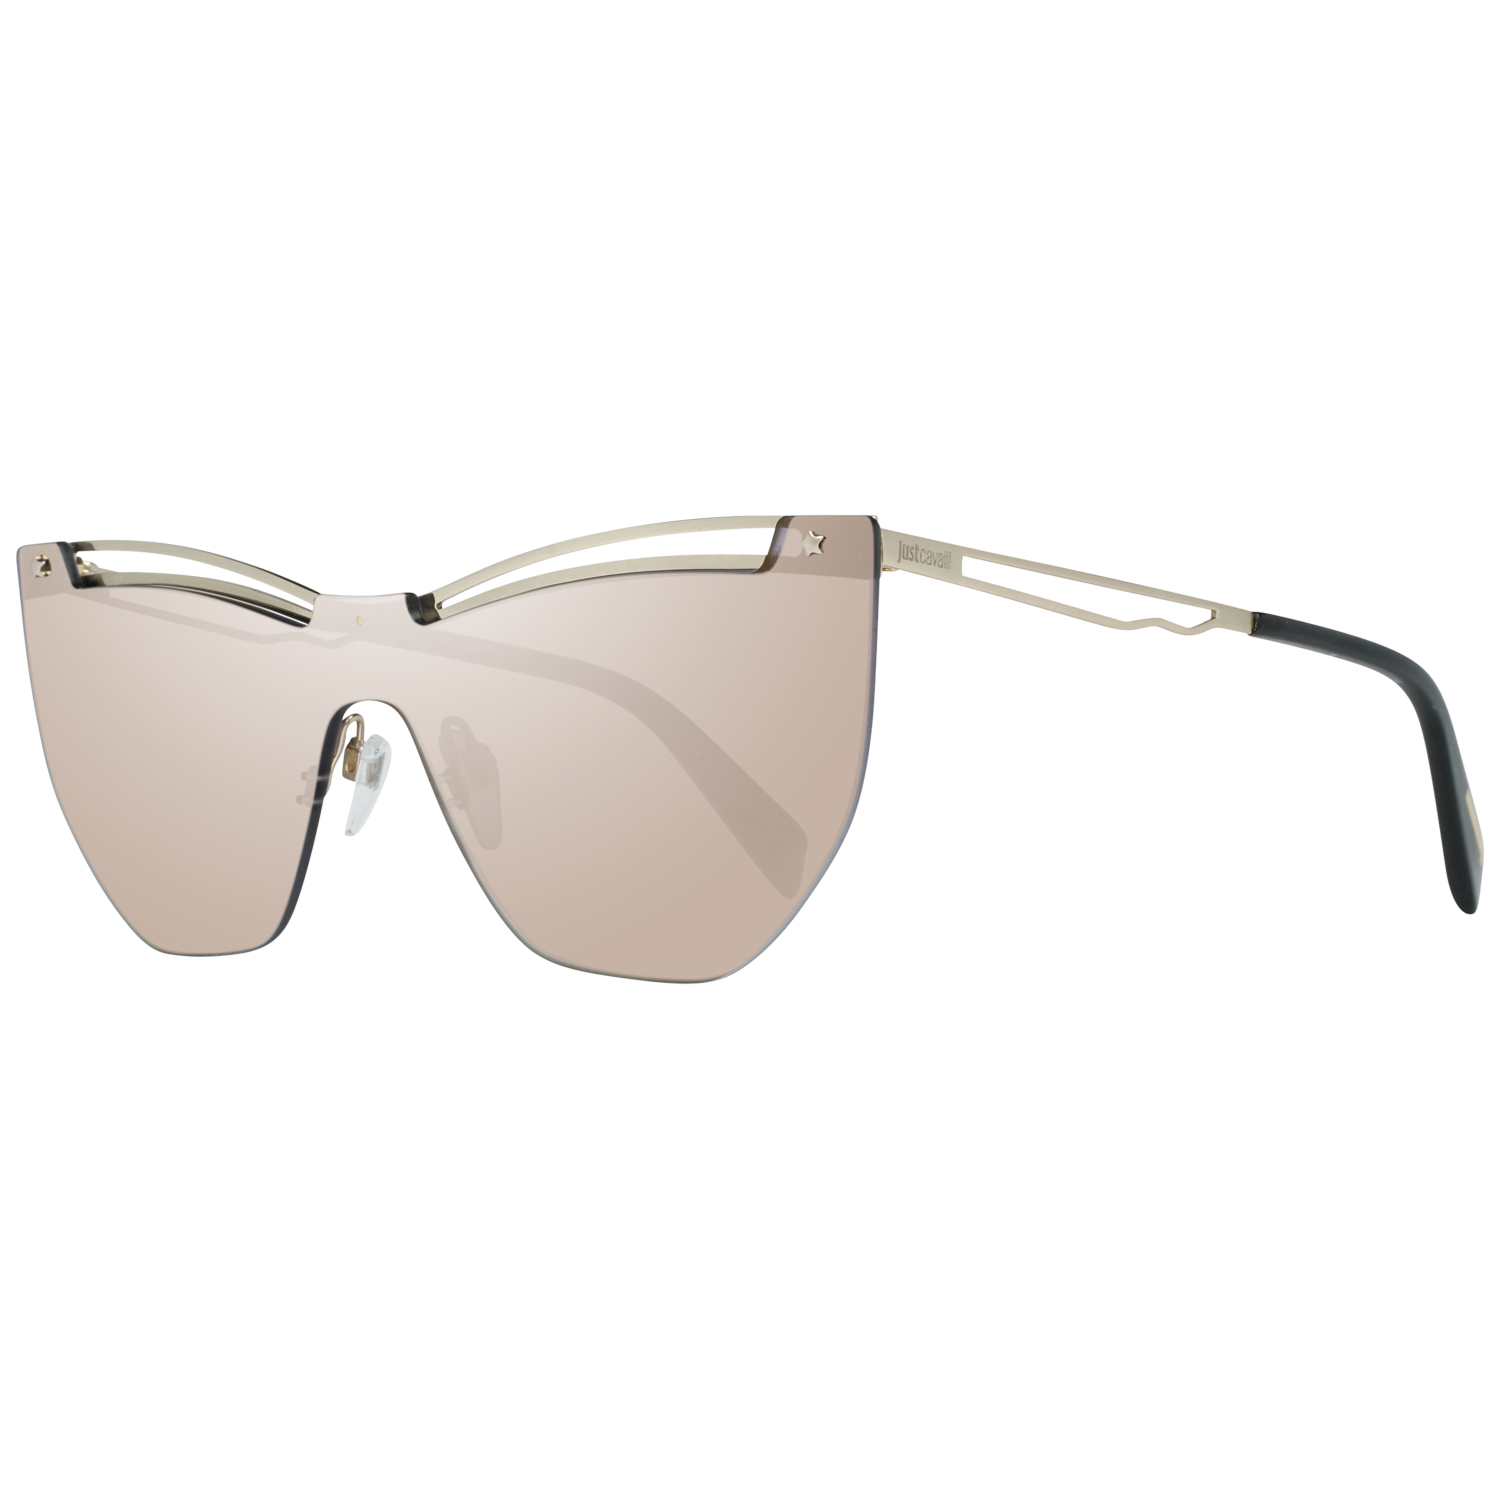 Just Cavalli Sunglasses Just Cavalli Sunglasses JC841S 32C 138 Eyeglasses Eyewear UK USA Australia 